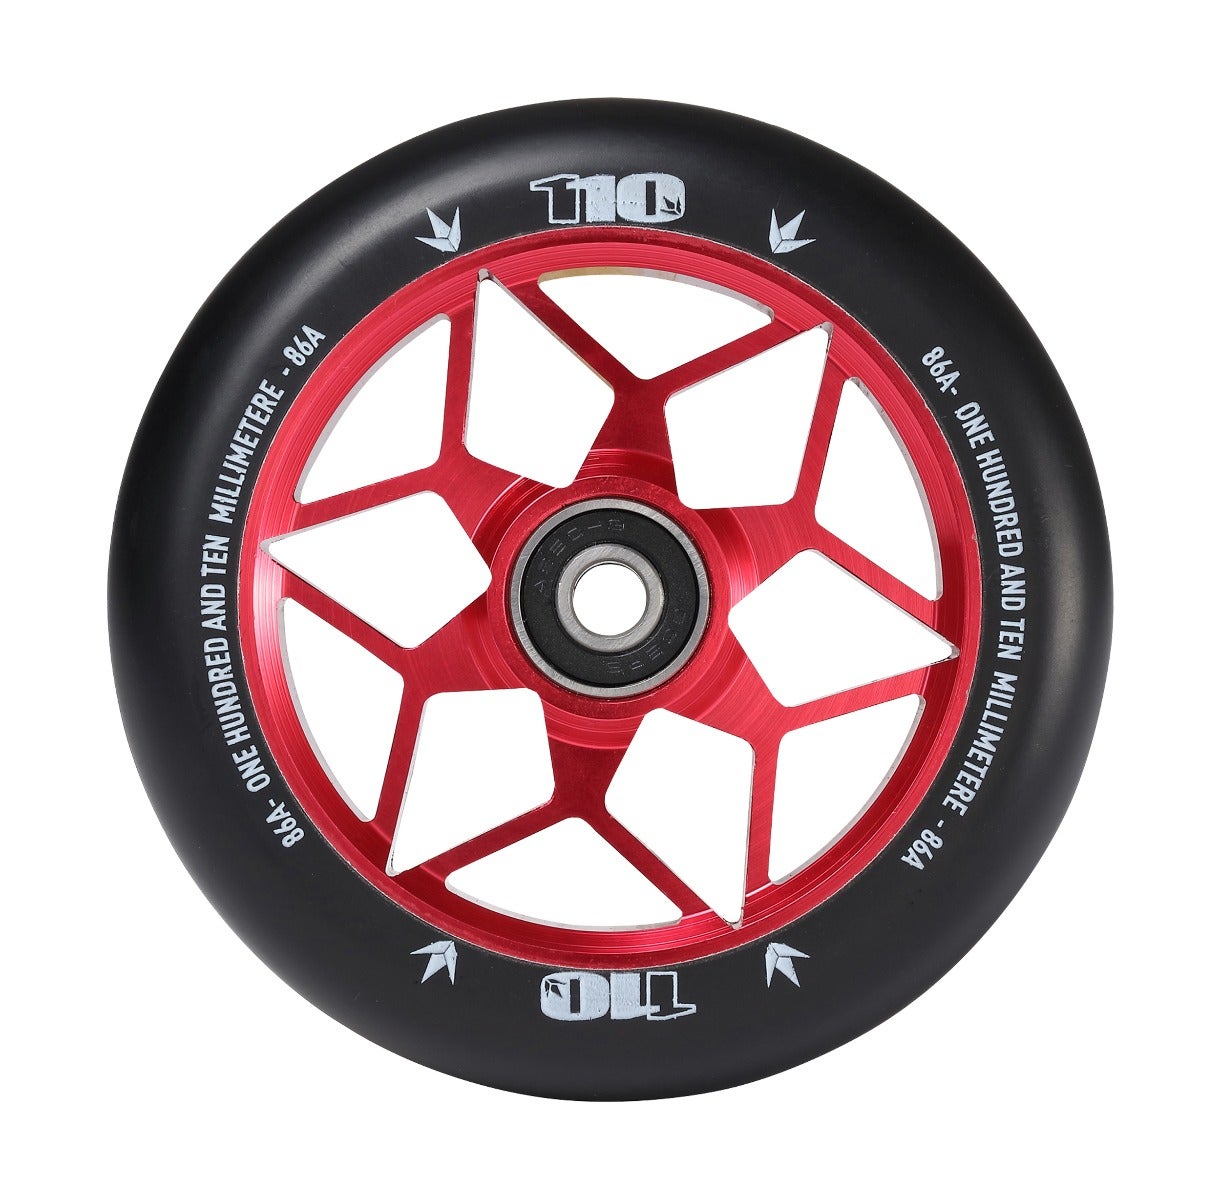 Blunt Envy Diamond Scooter Wheel Pair - 110mm x 24mm - Black Red
